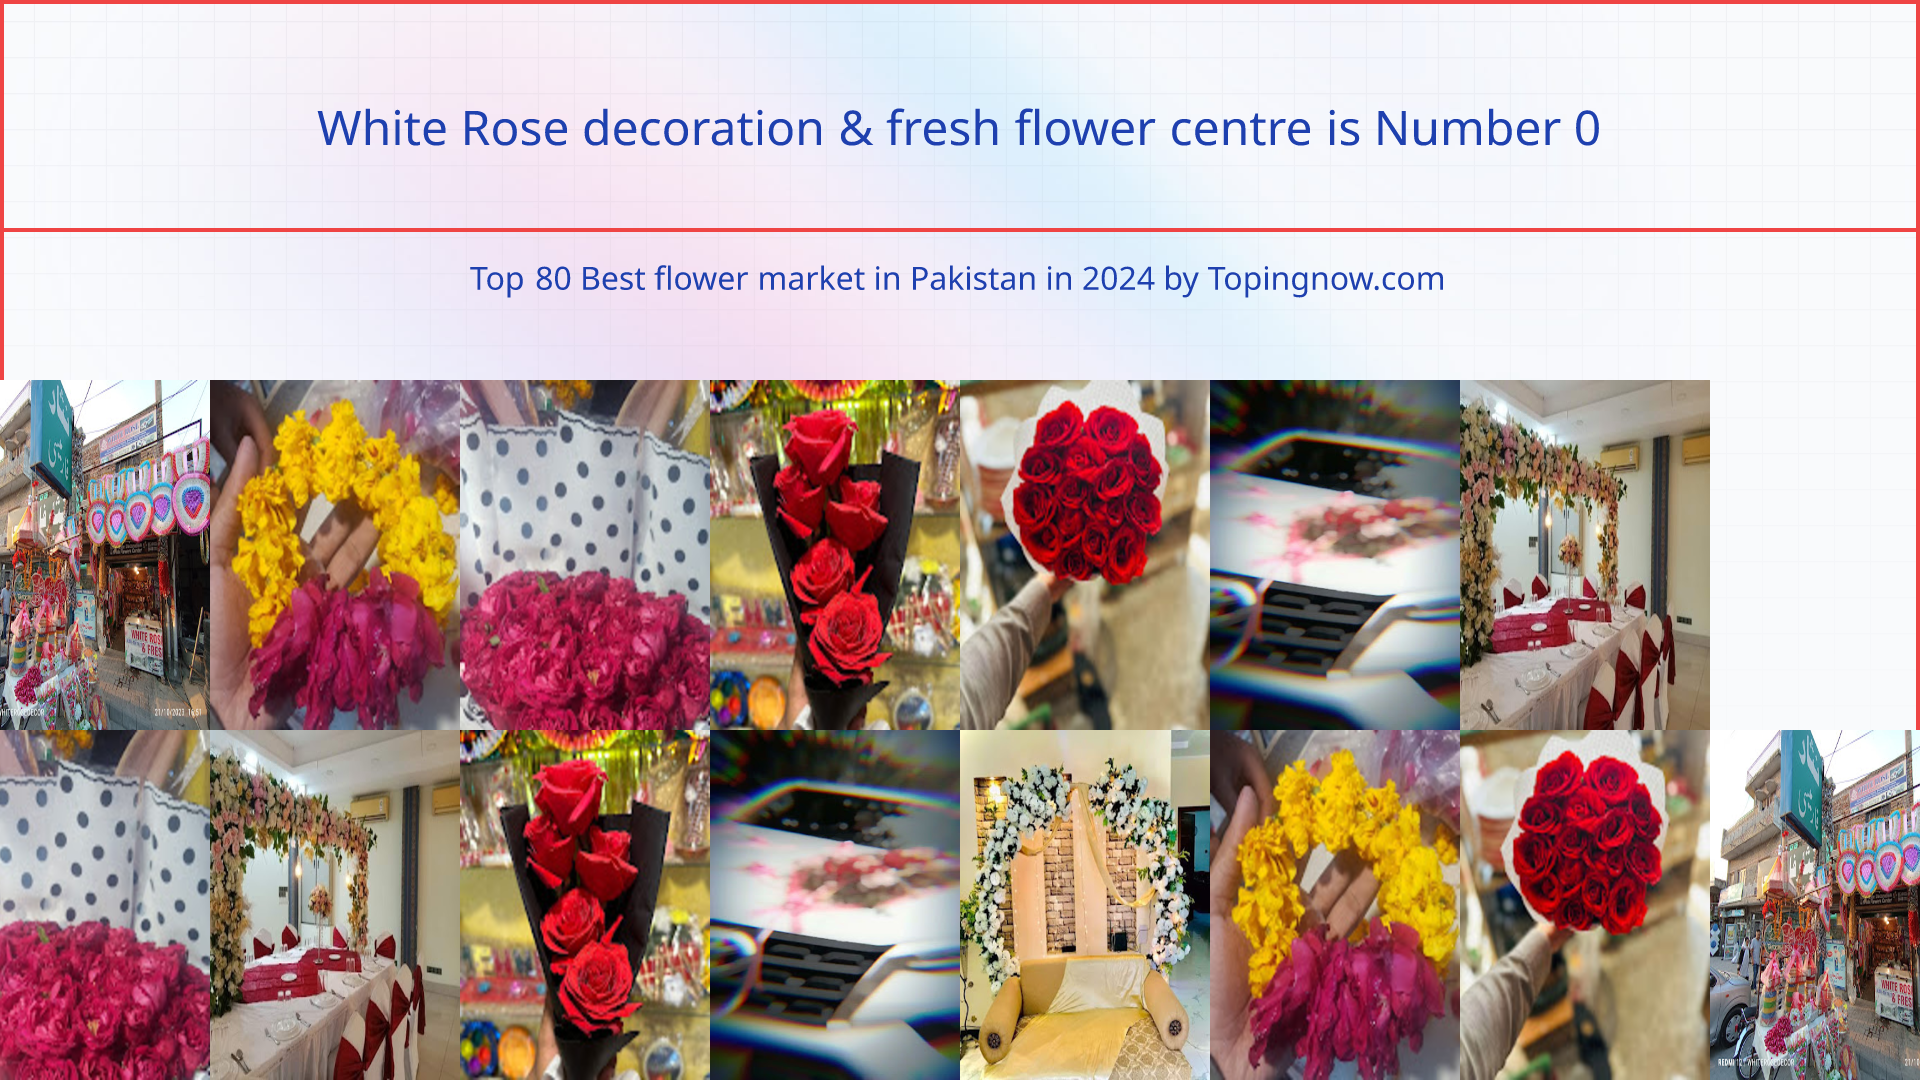 White Rose decoration & fresh flower centre: Top 80 Best flower market in Pakistan in 2024